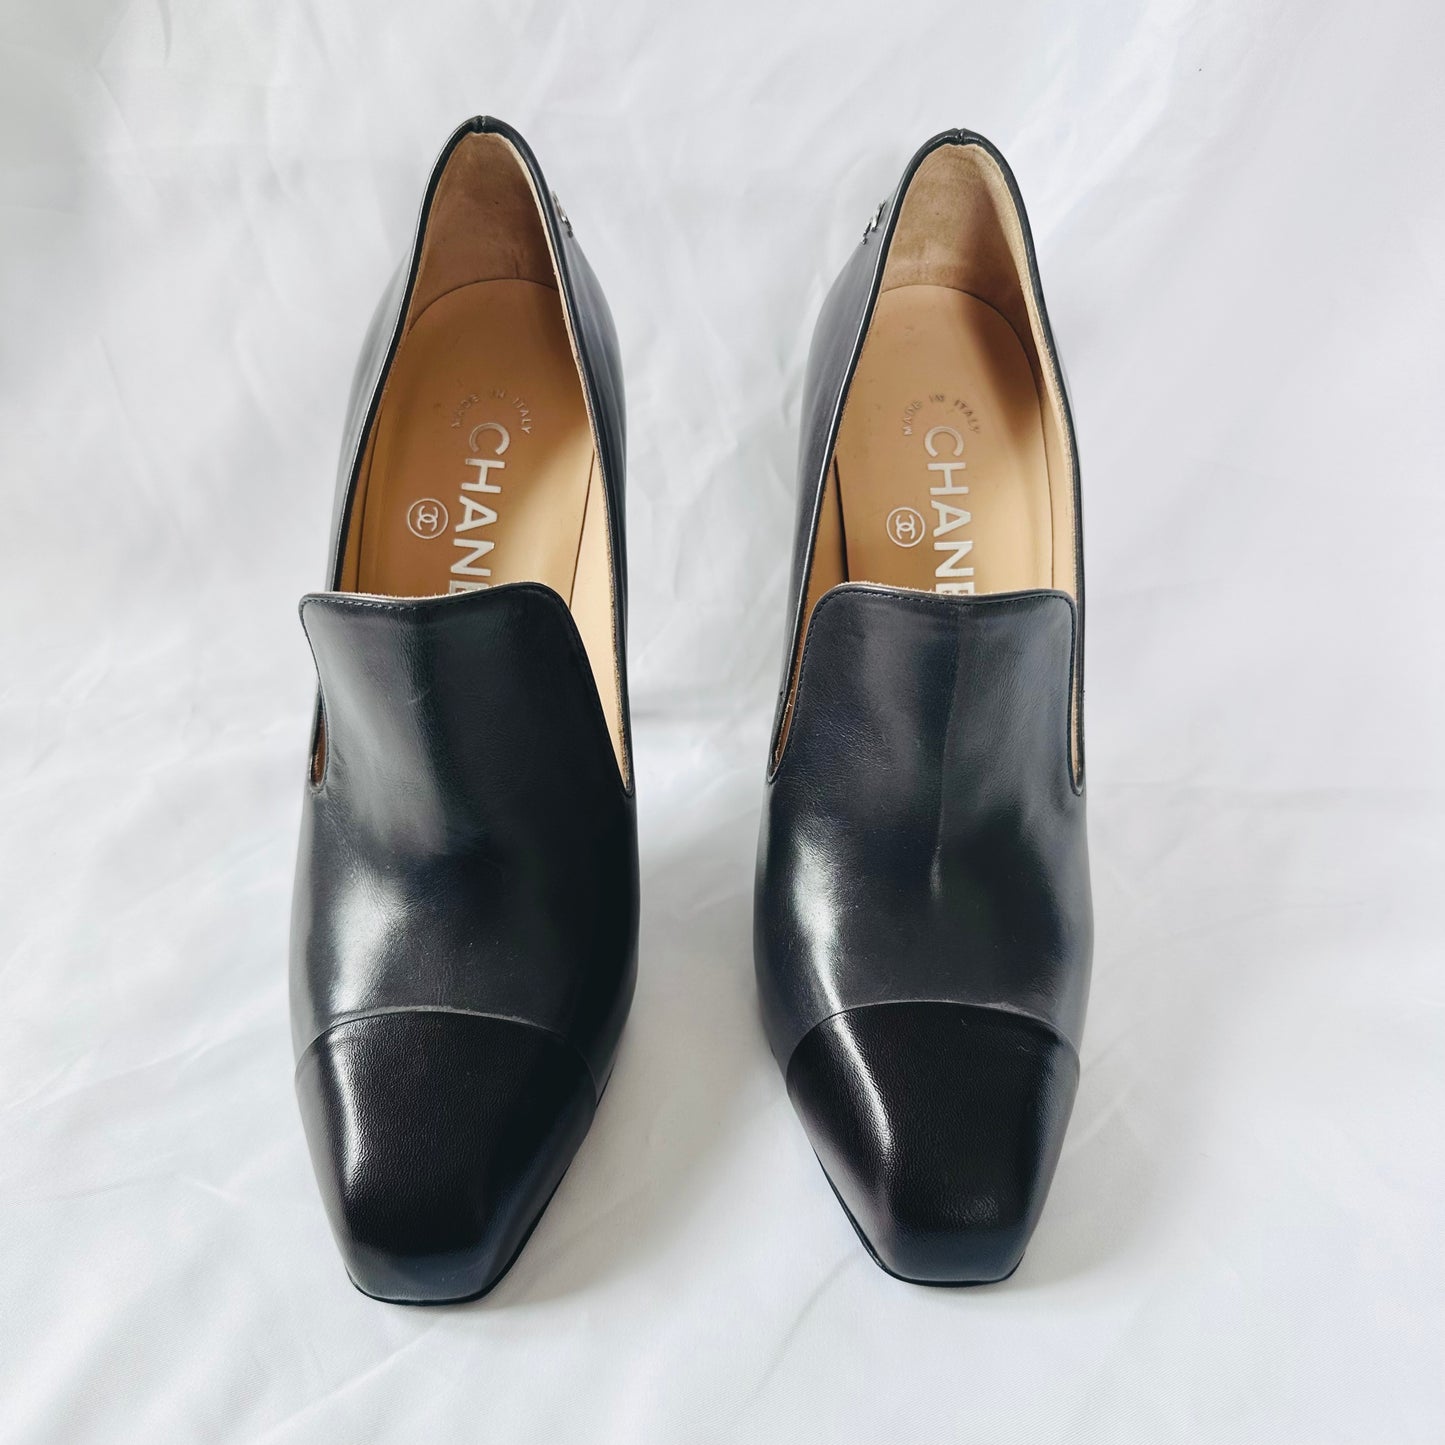 CHANEL - Shoes bicolor grey/black size 37,5 EU